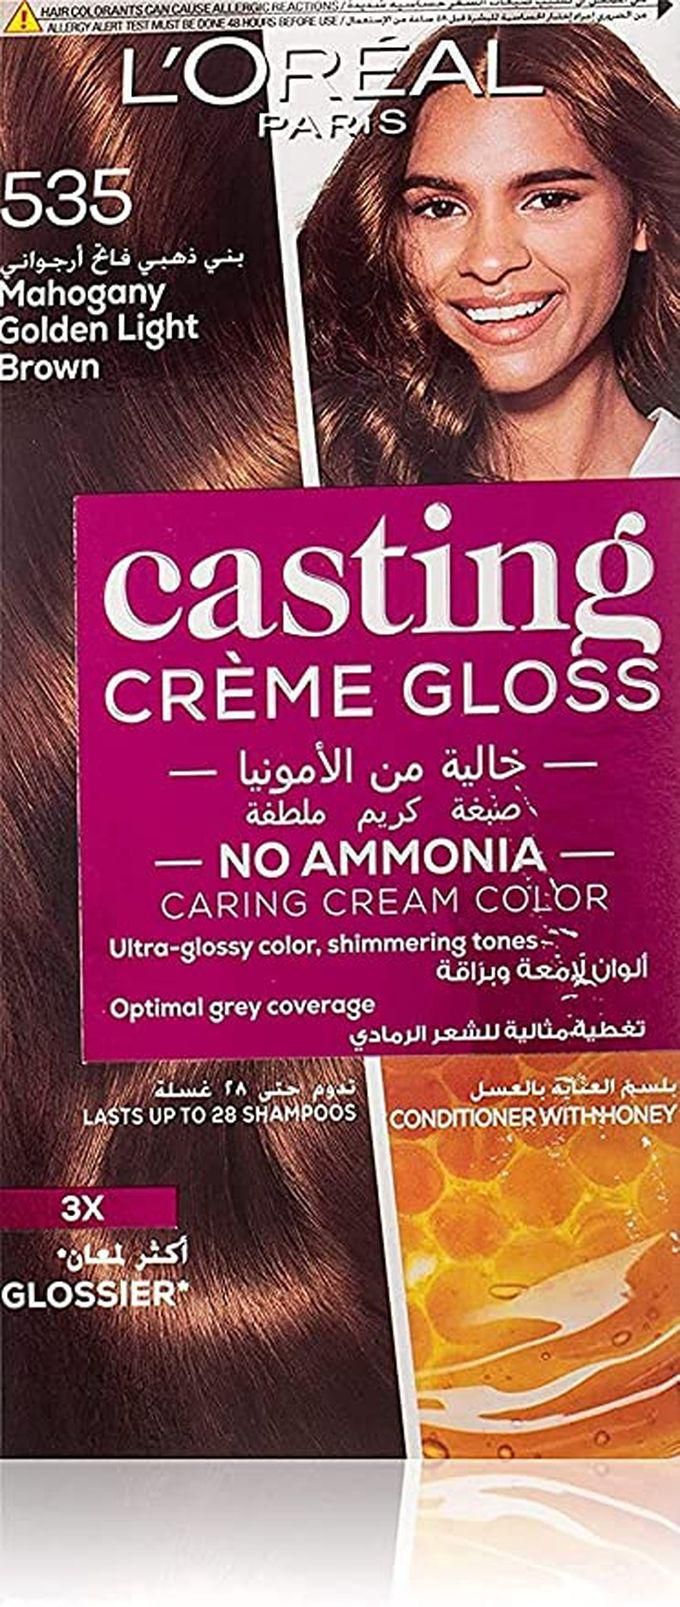 L'Oreal Paris Casting Creme Gloss 535 Mahagony Golden Light Brown Hair Color